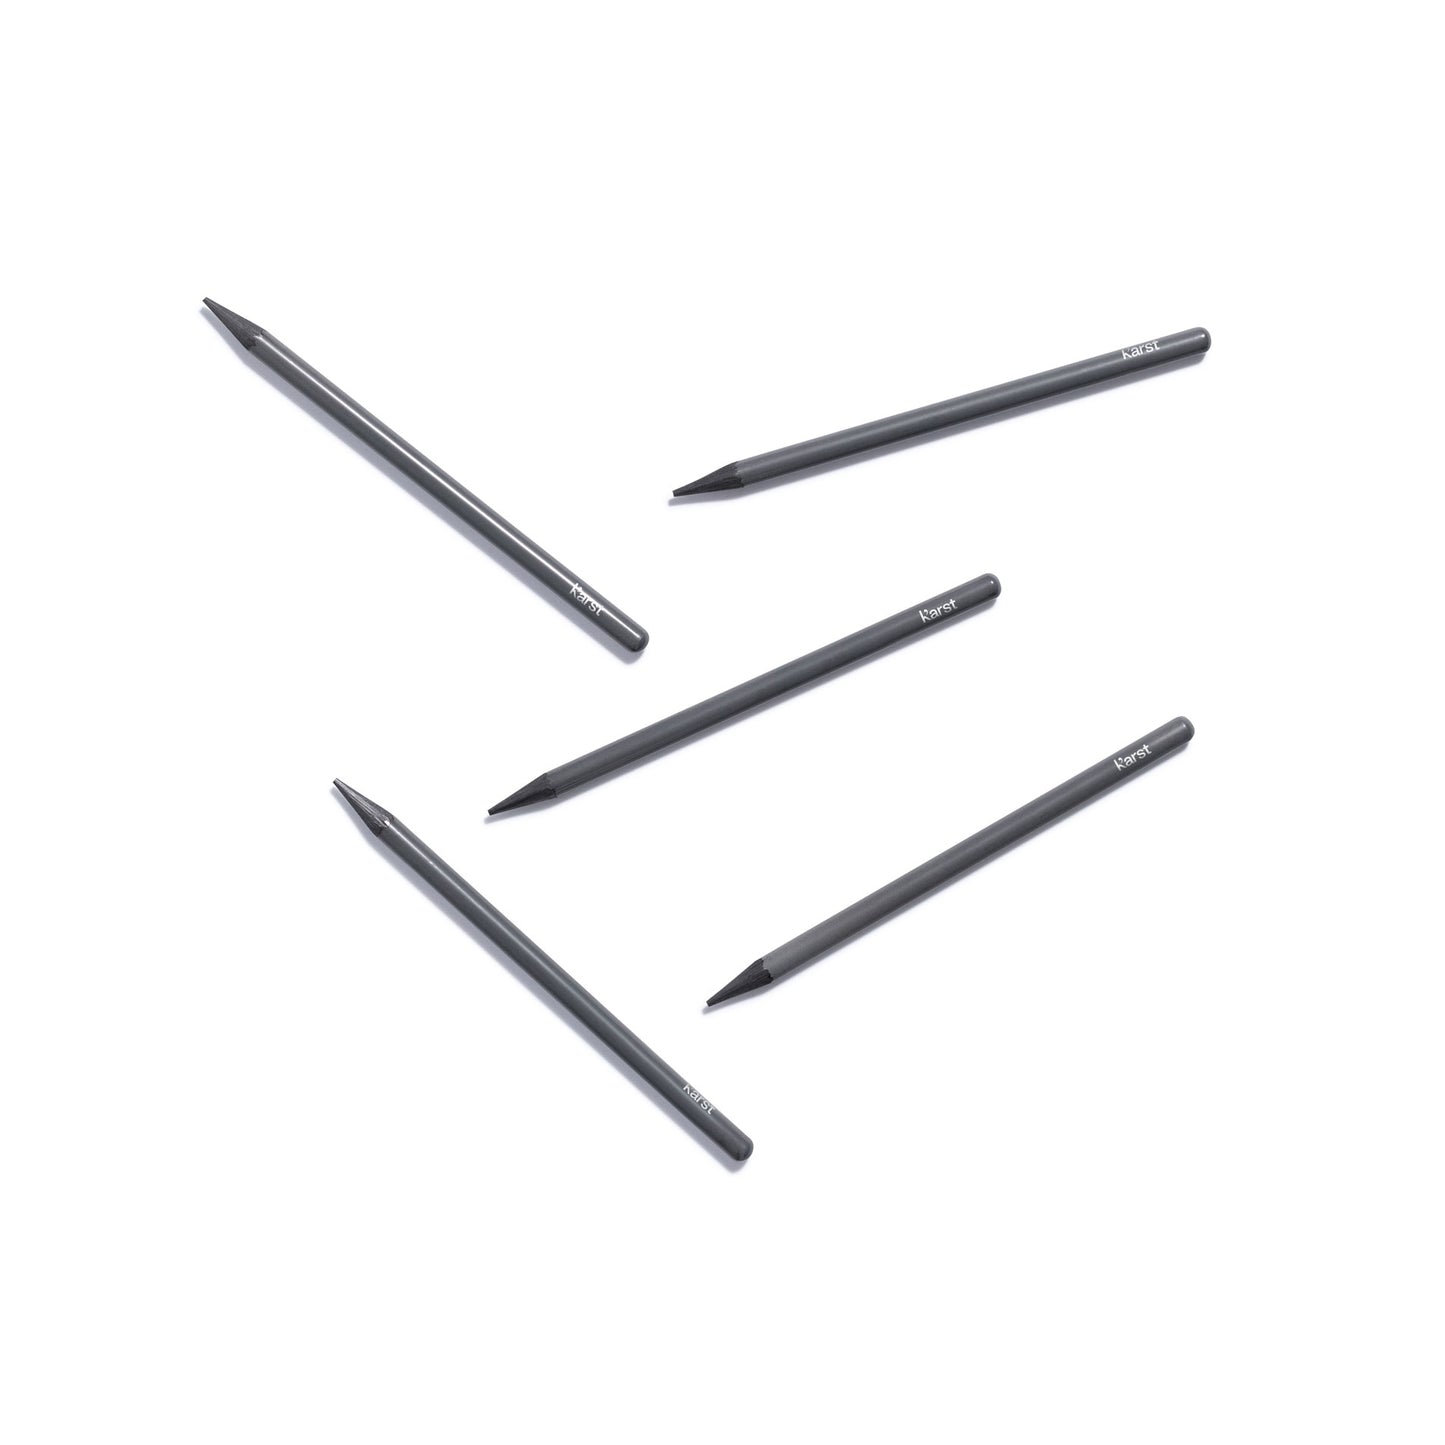 Karst - Woodless Pencils B-10B density